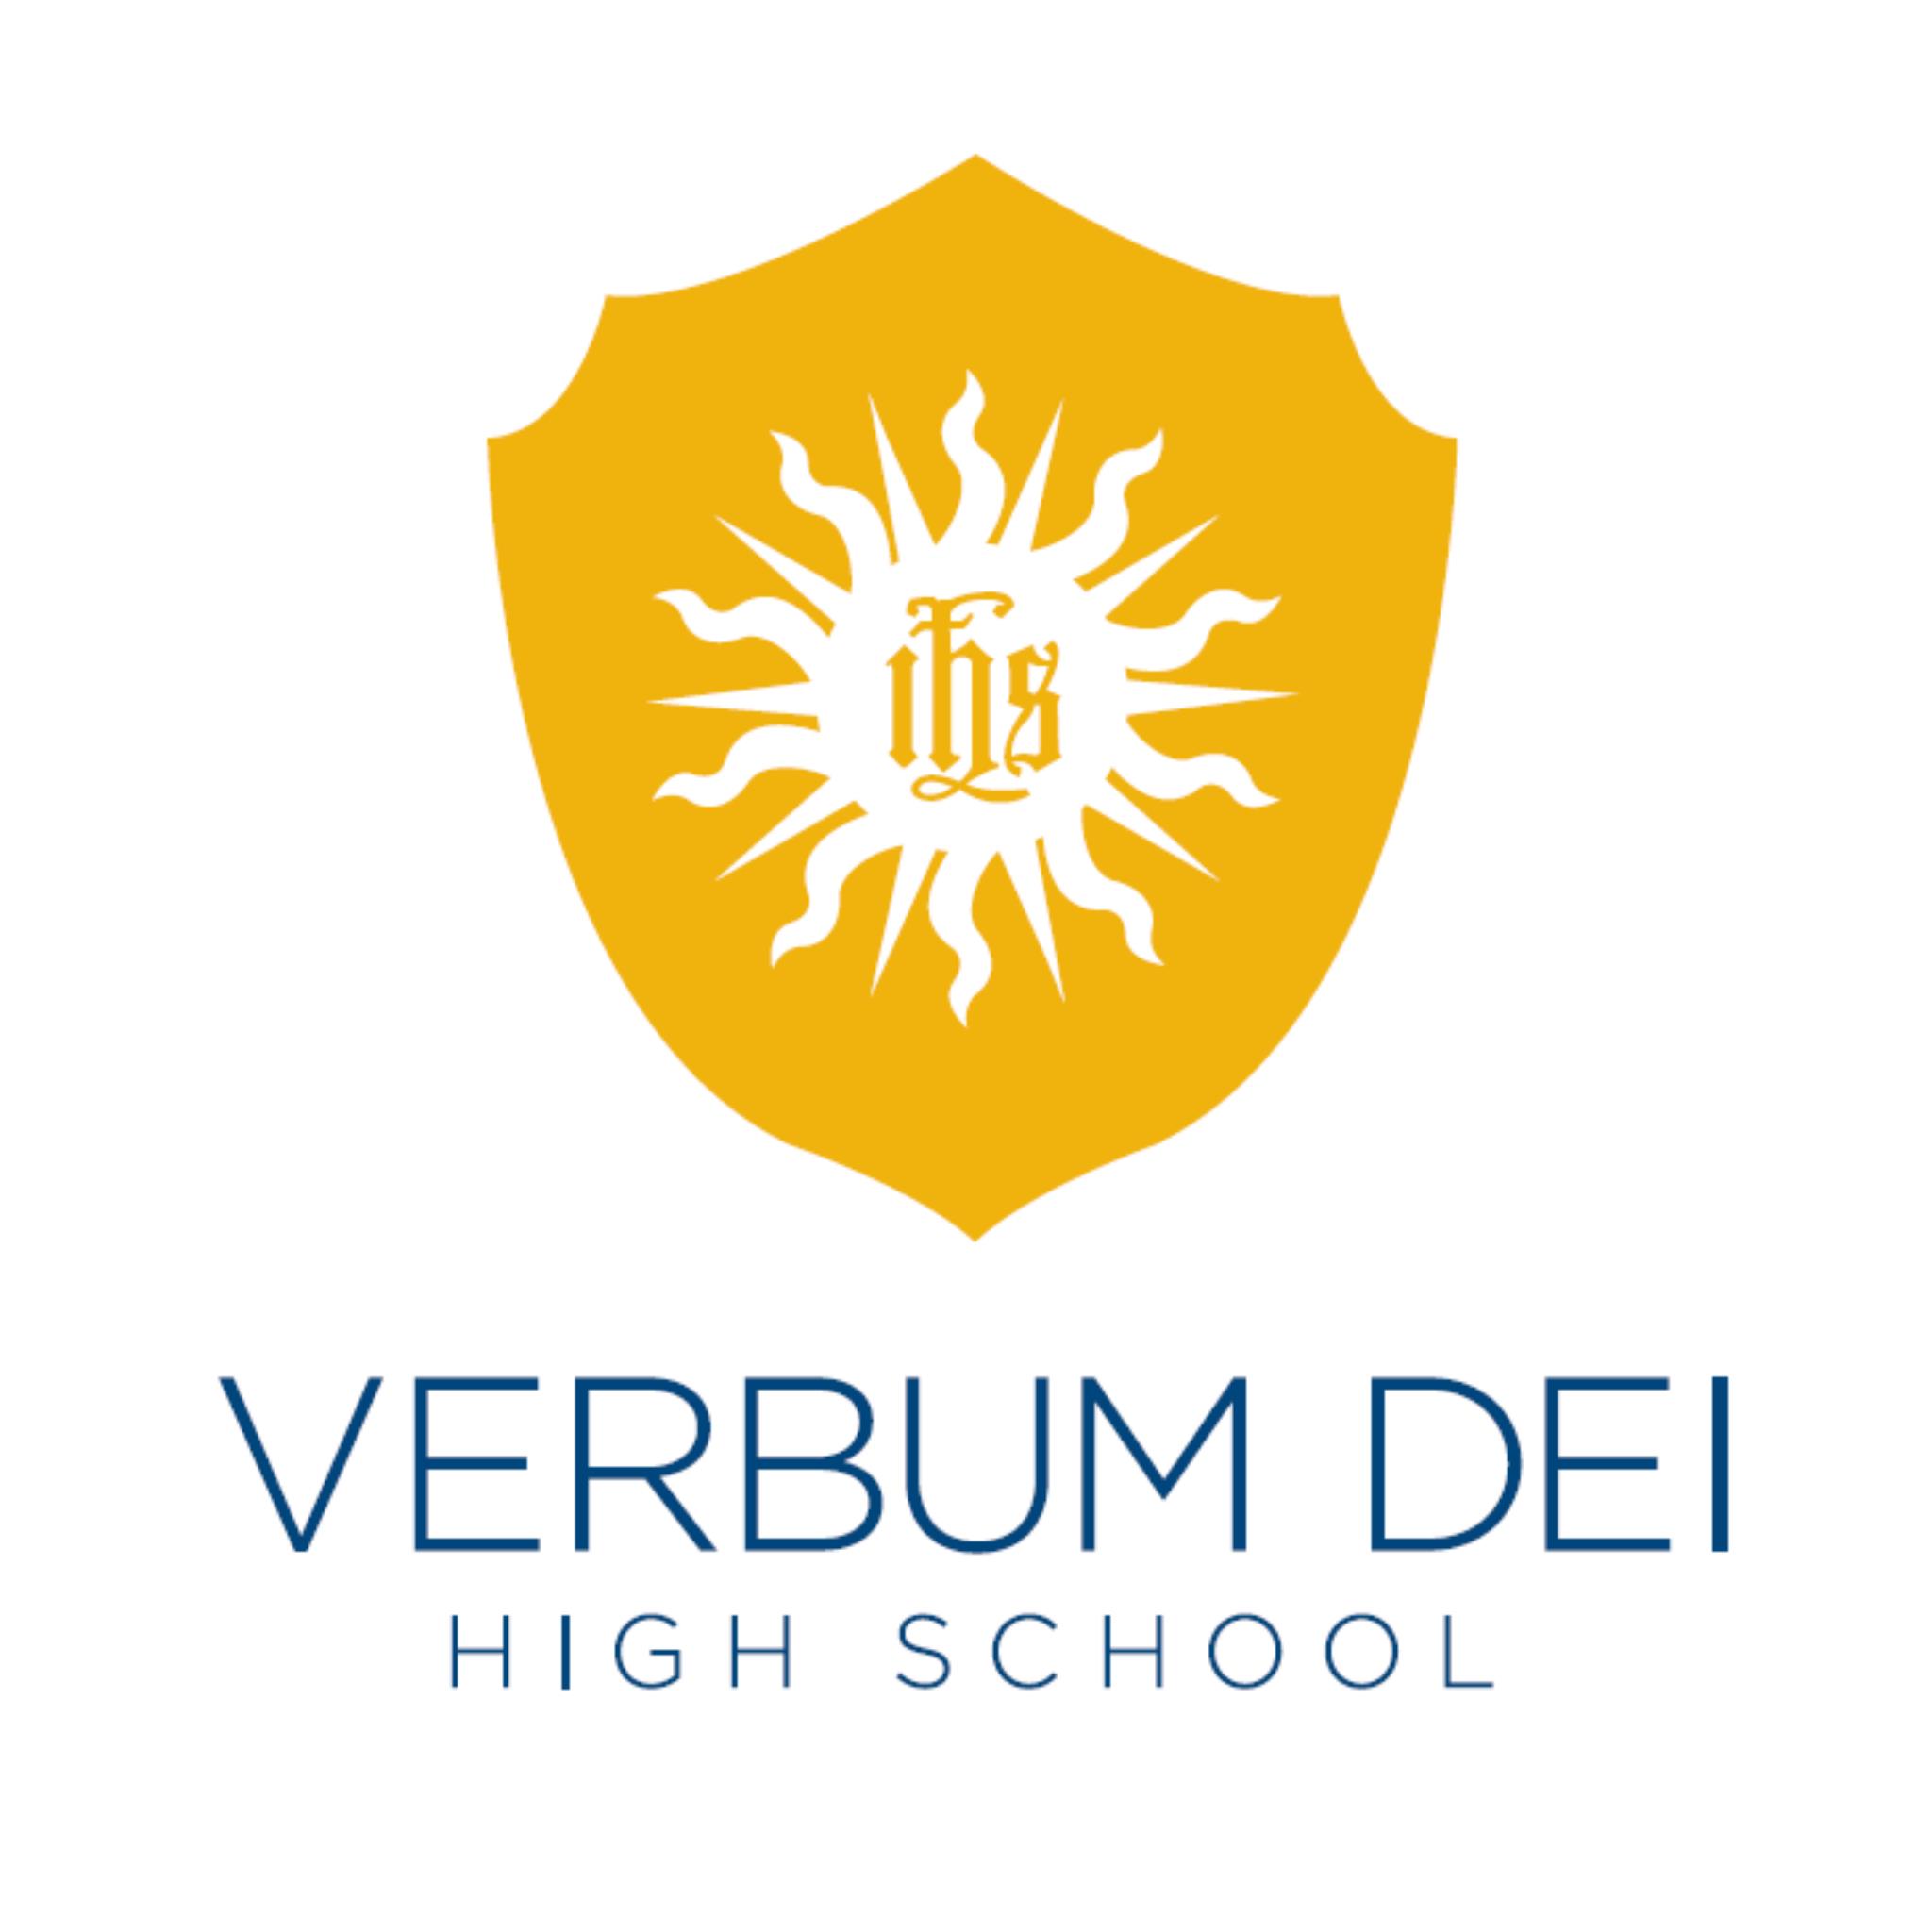 Verbum Dei High School